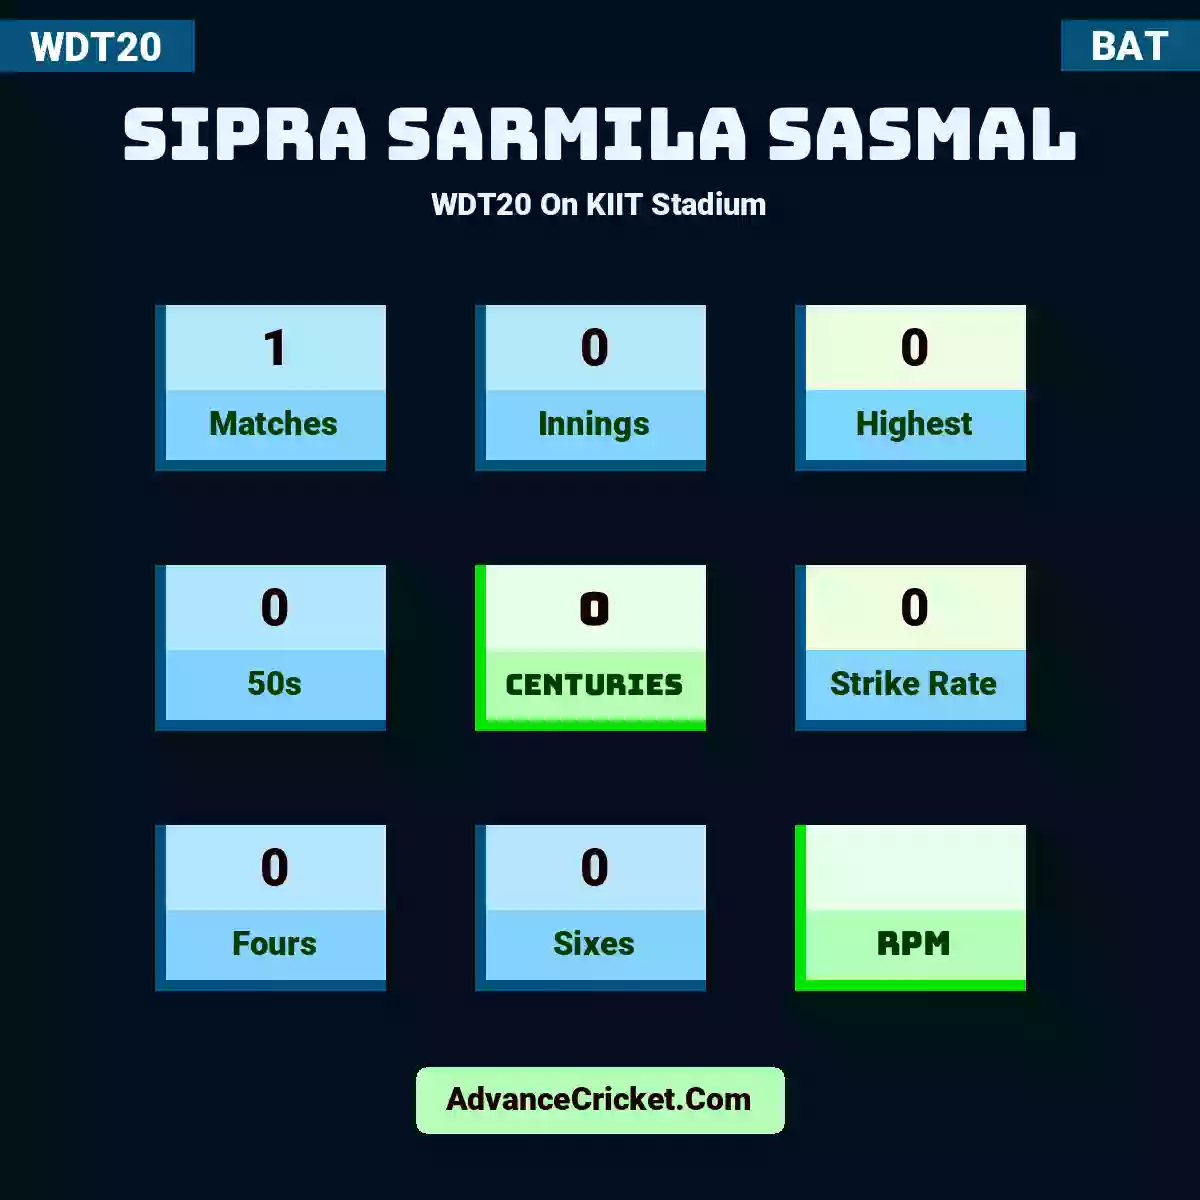 Sipra Sarmila Sasmal WDT20  On KIIT Stadium, Sipra Sarmila Sasmal played 1 matches, scored 0 runs as highest, 0 half-centuries, and 0 centuries, with a strike rate of 0. S.Sarmila Sasmal hit 0 fours and 0 sixes.